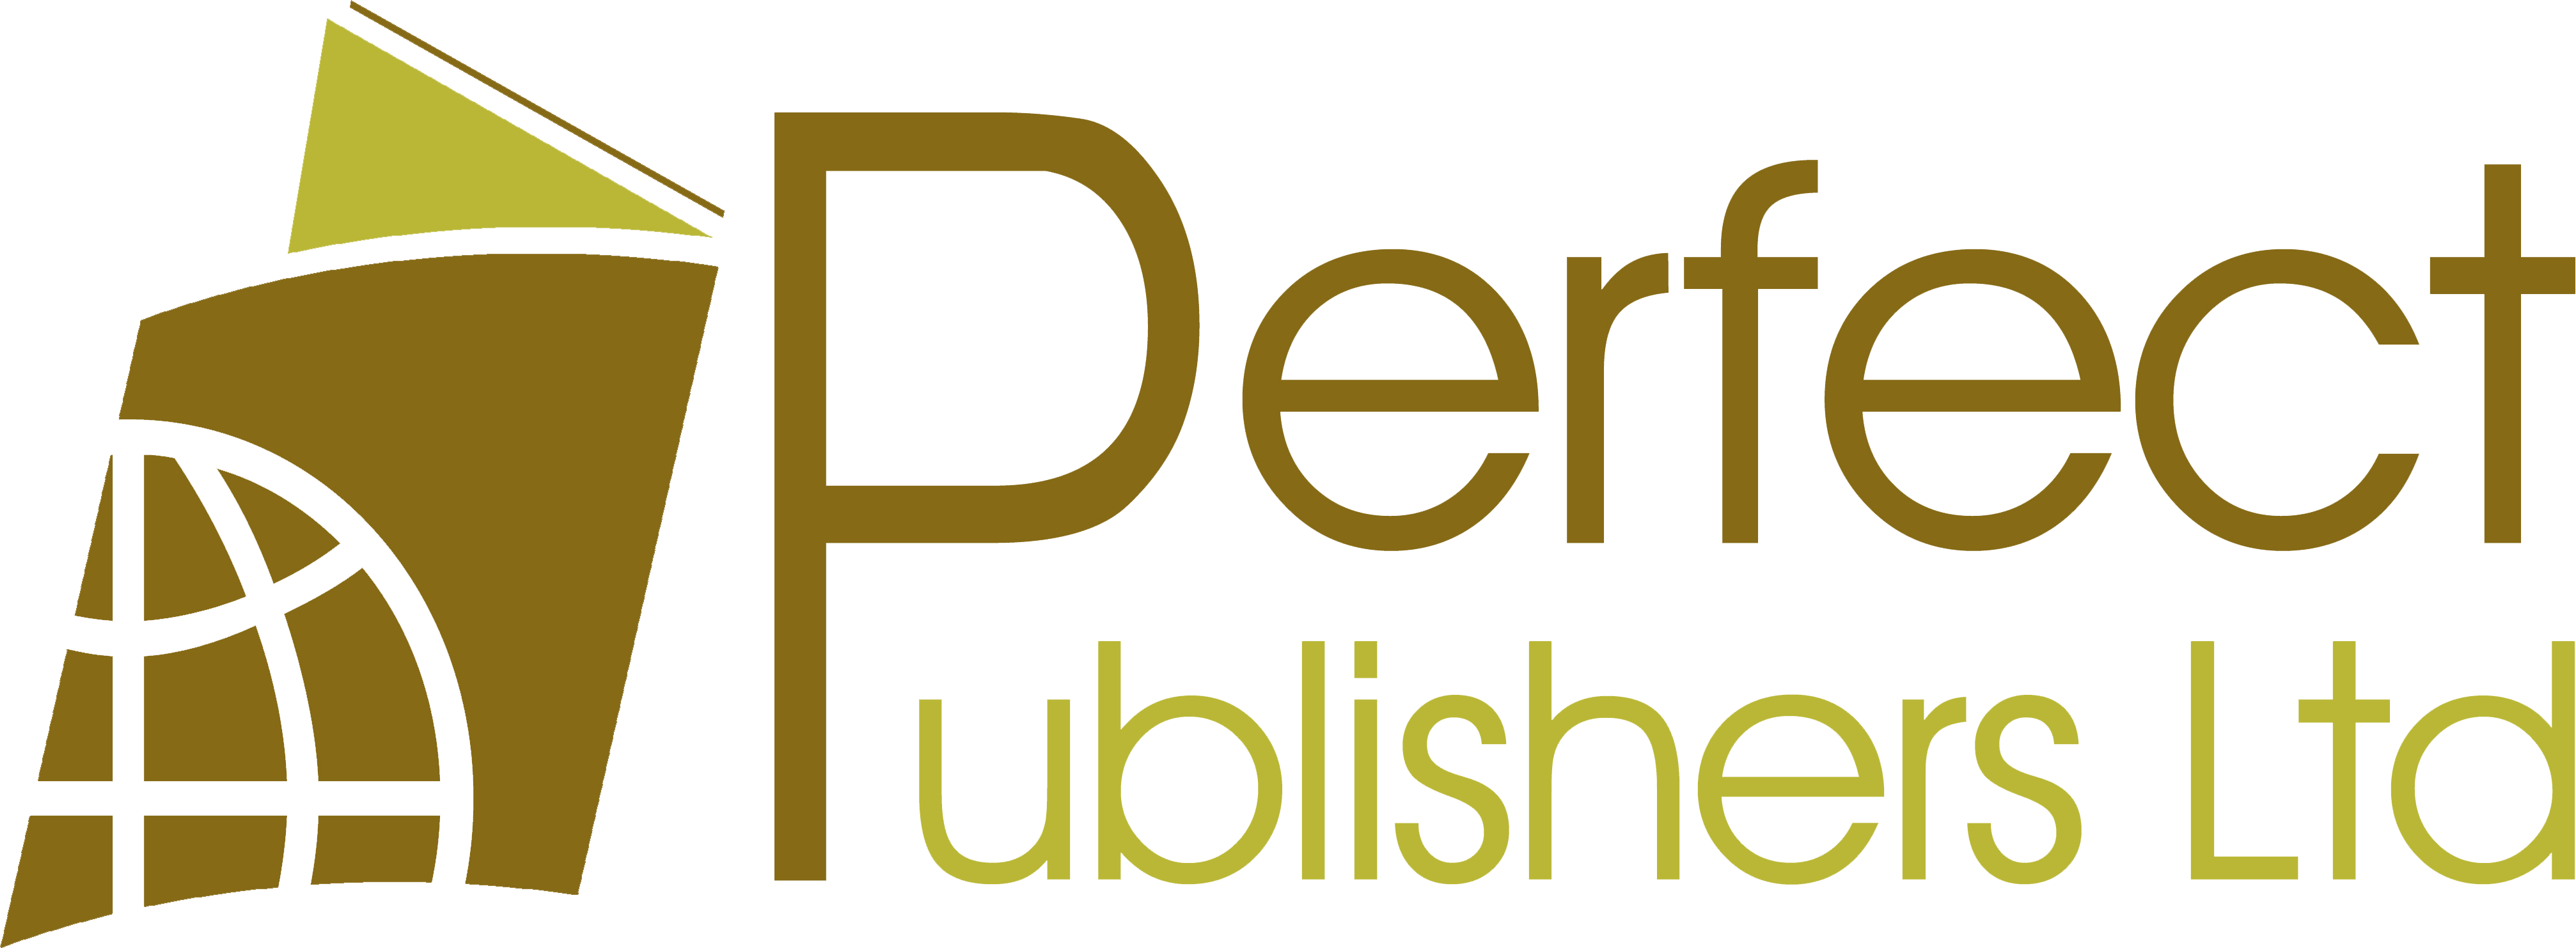 Perfect Publishers Ltd